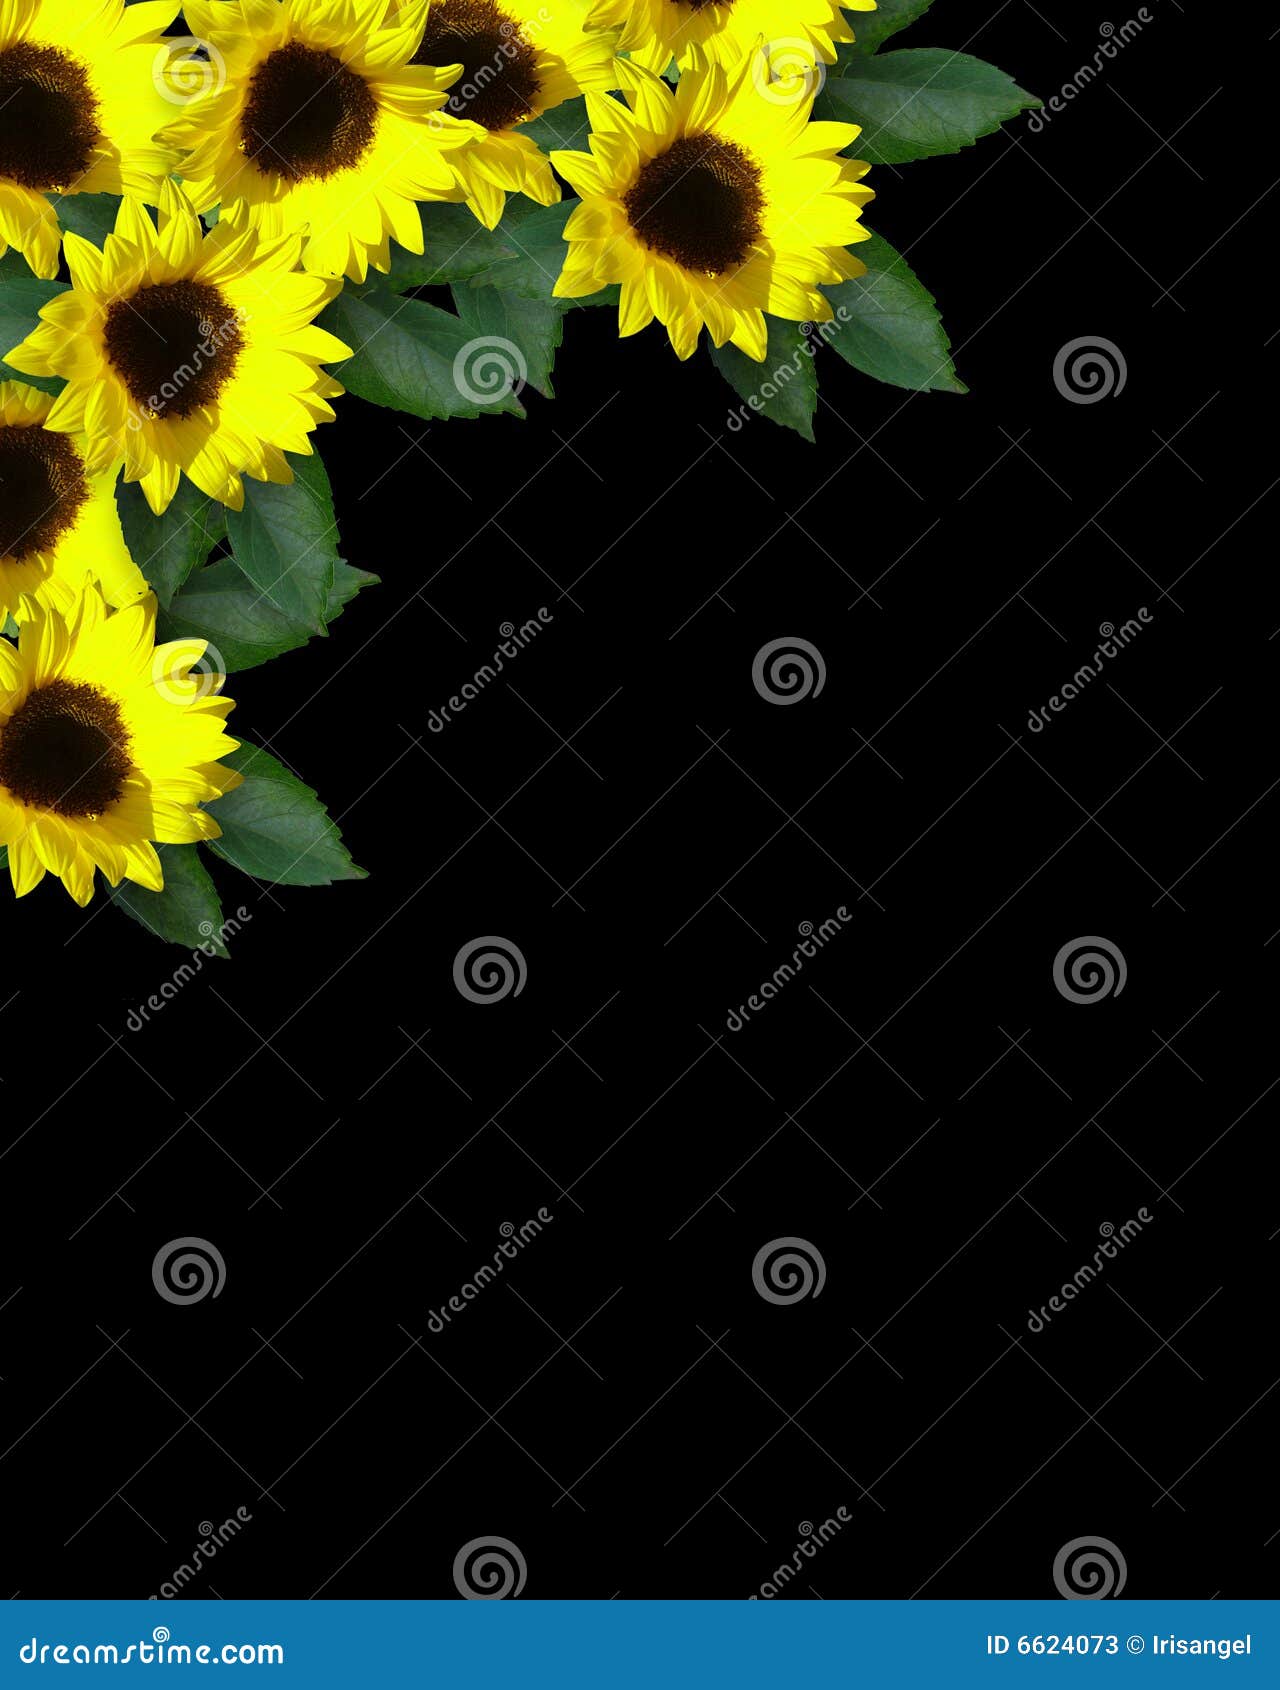 Sunflowers on Black Background Stock Illustration - Illustration ...